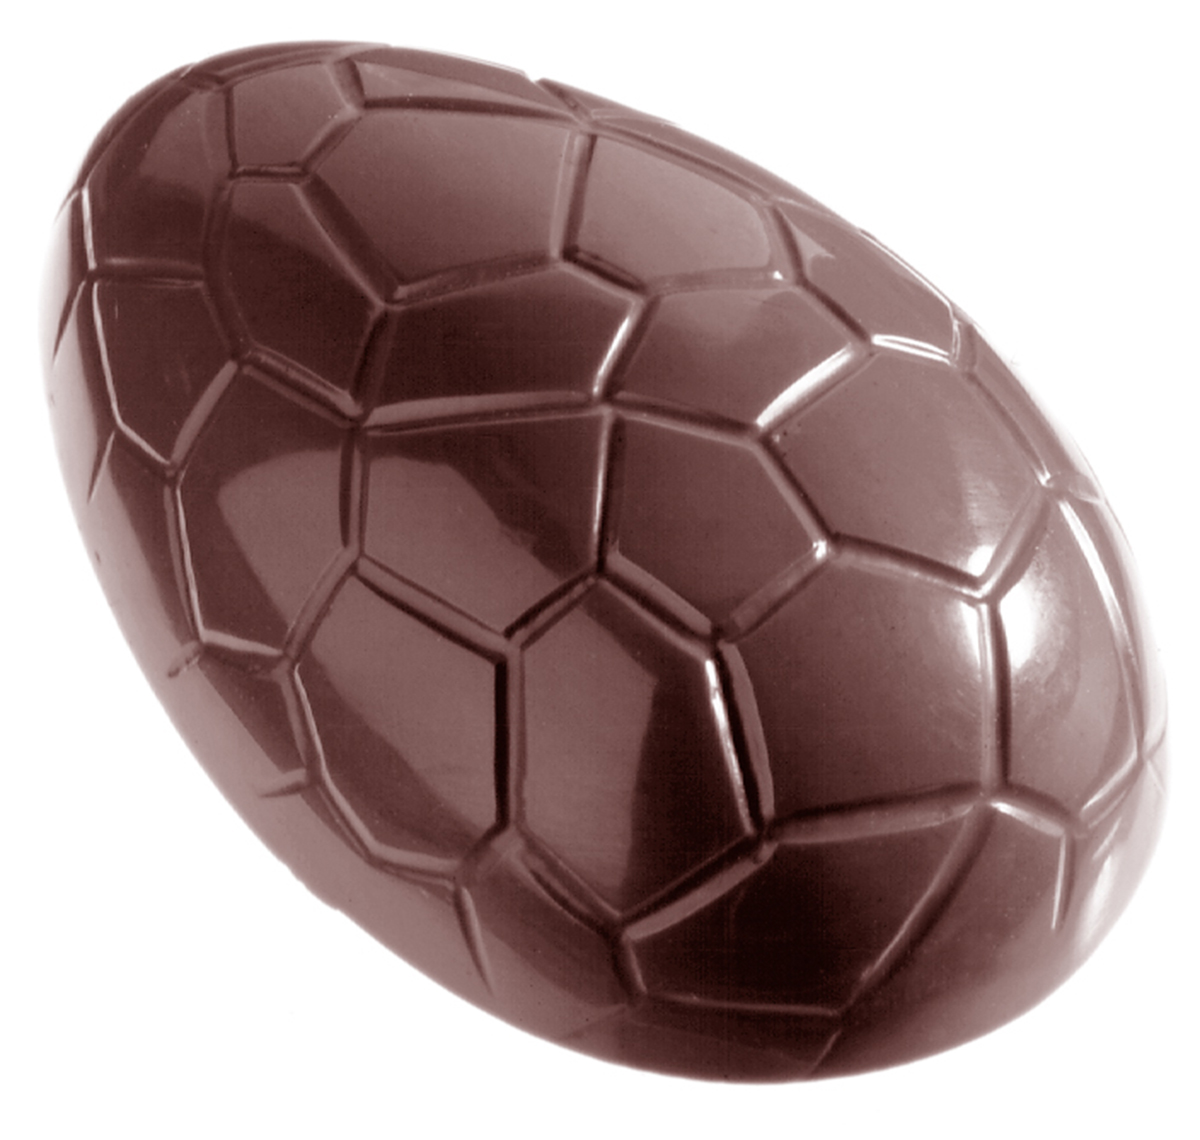 Professionel chokoladeform i polycarbonat - Egg kroko 8 cm CW2205